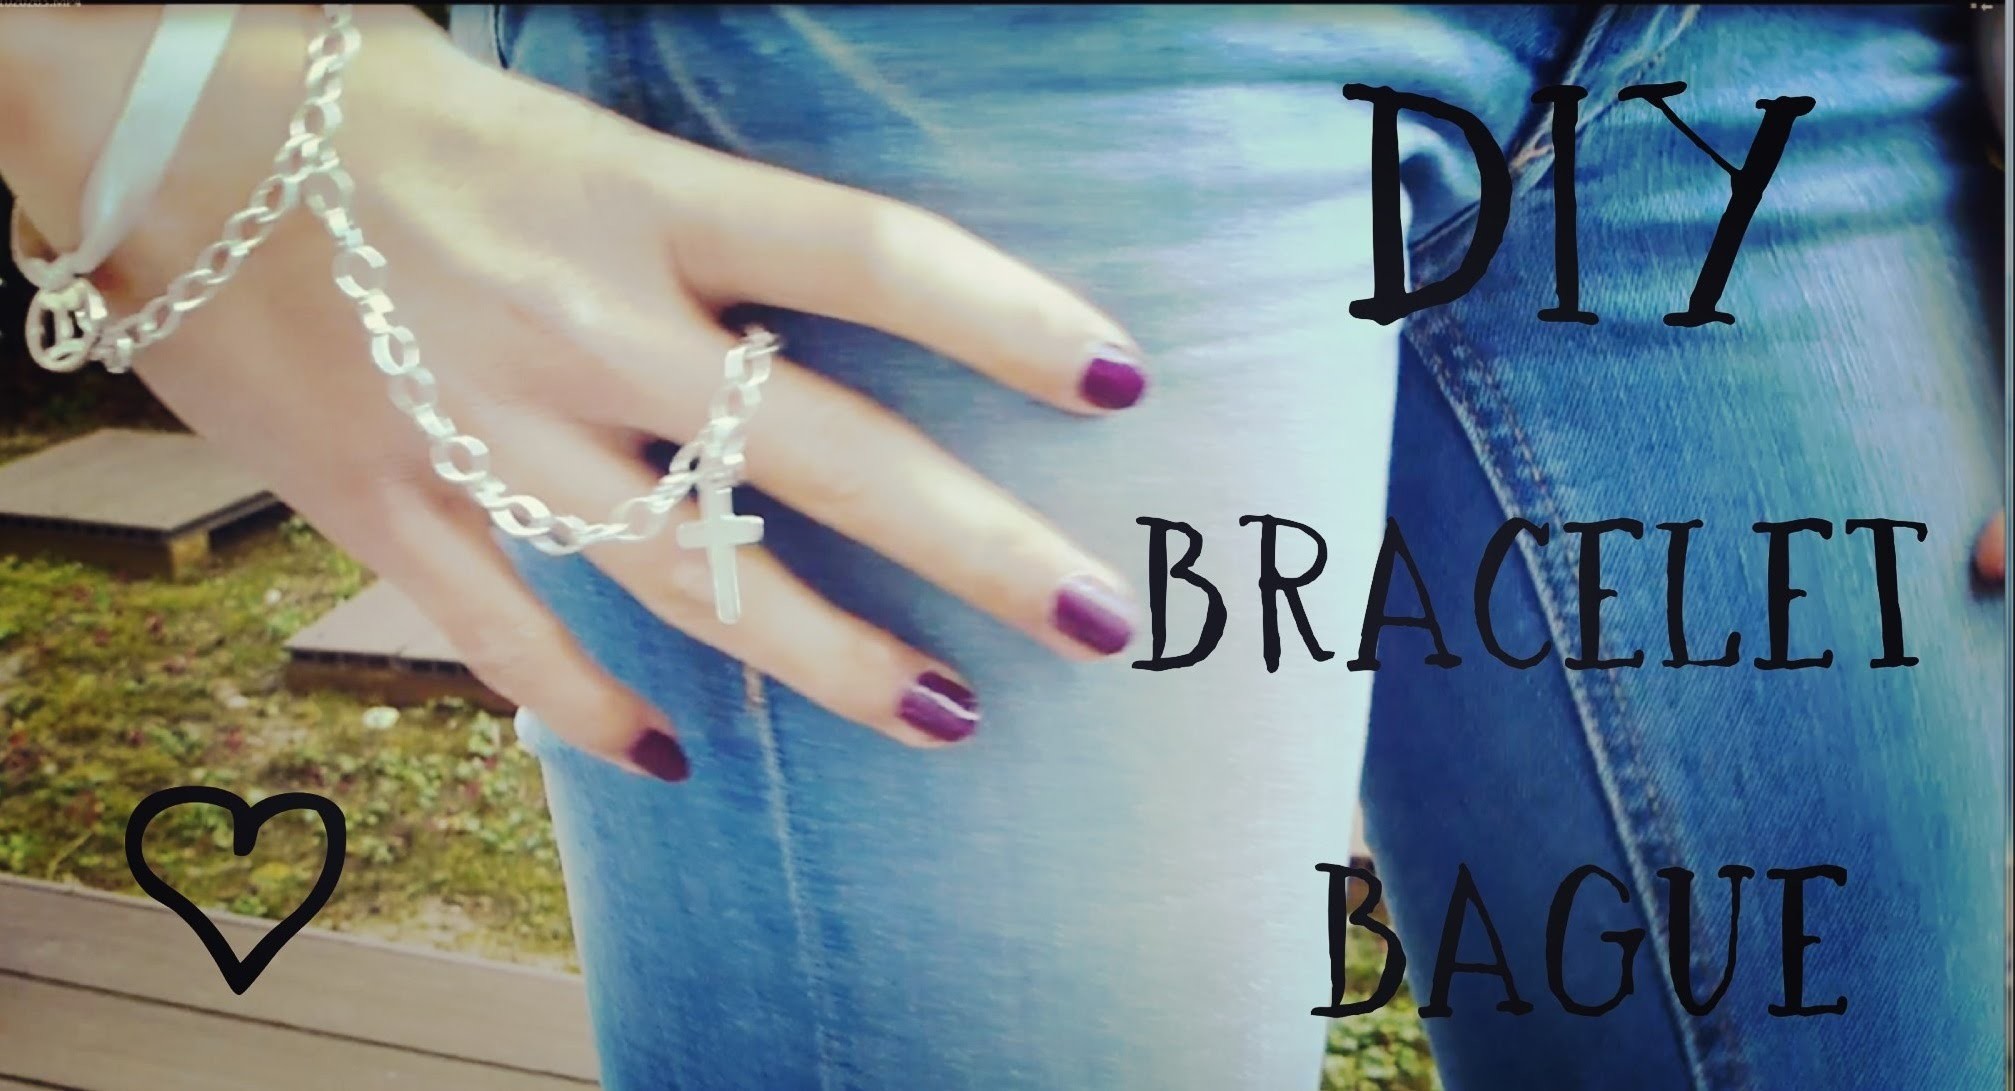 [DIY] Bracelet-Bague | Ring Bracelet with cross